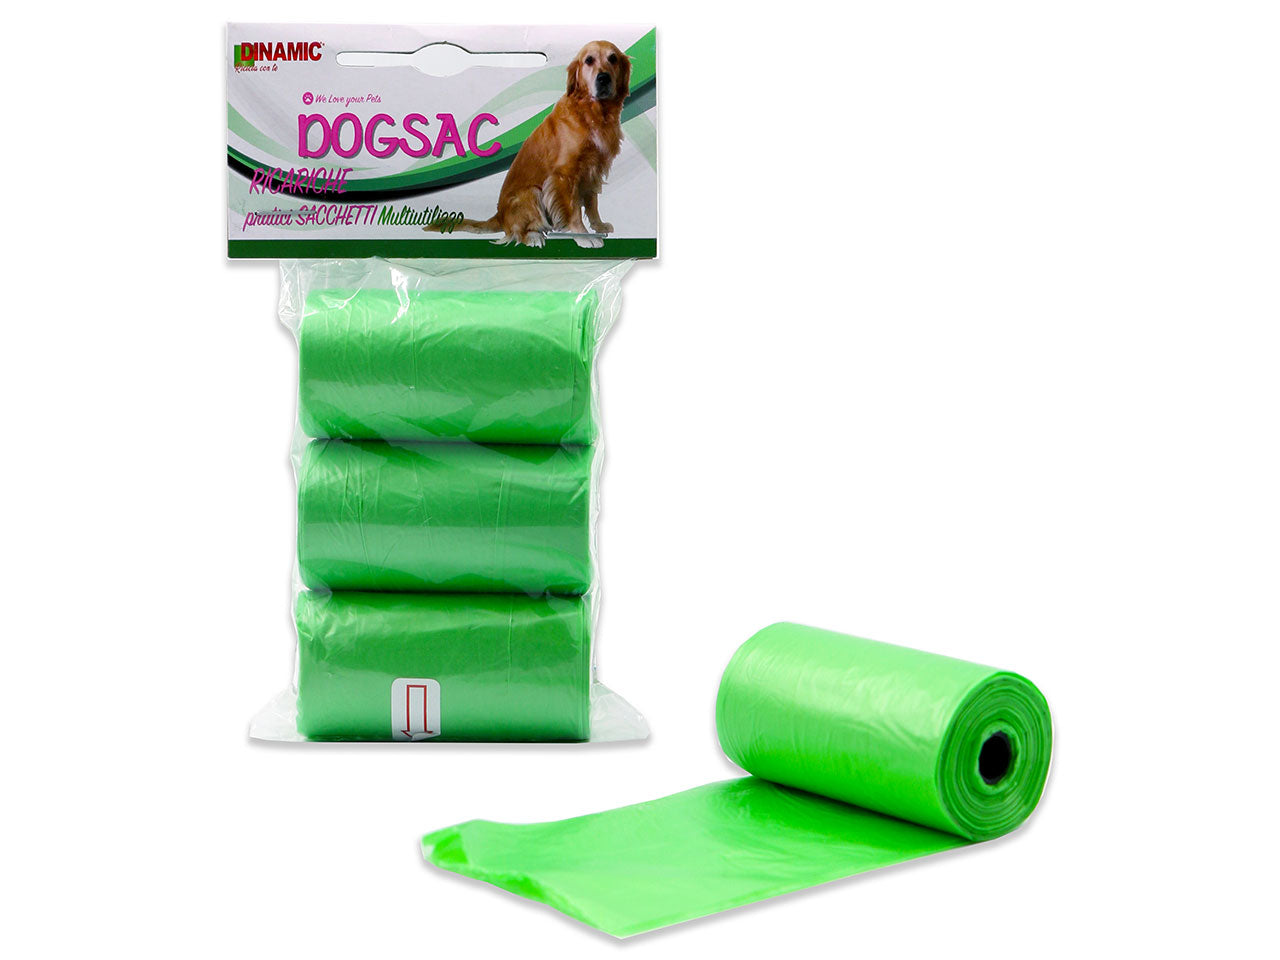 Sacchetti igienici dogsac verde 22x32cm - 3 rotoli da 20 sacchetti